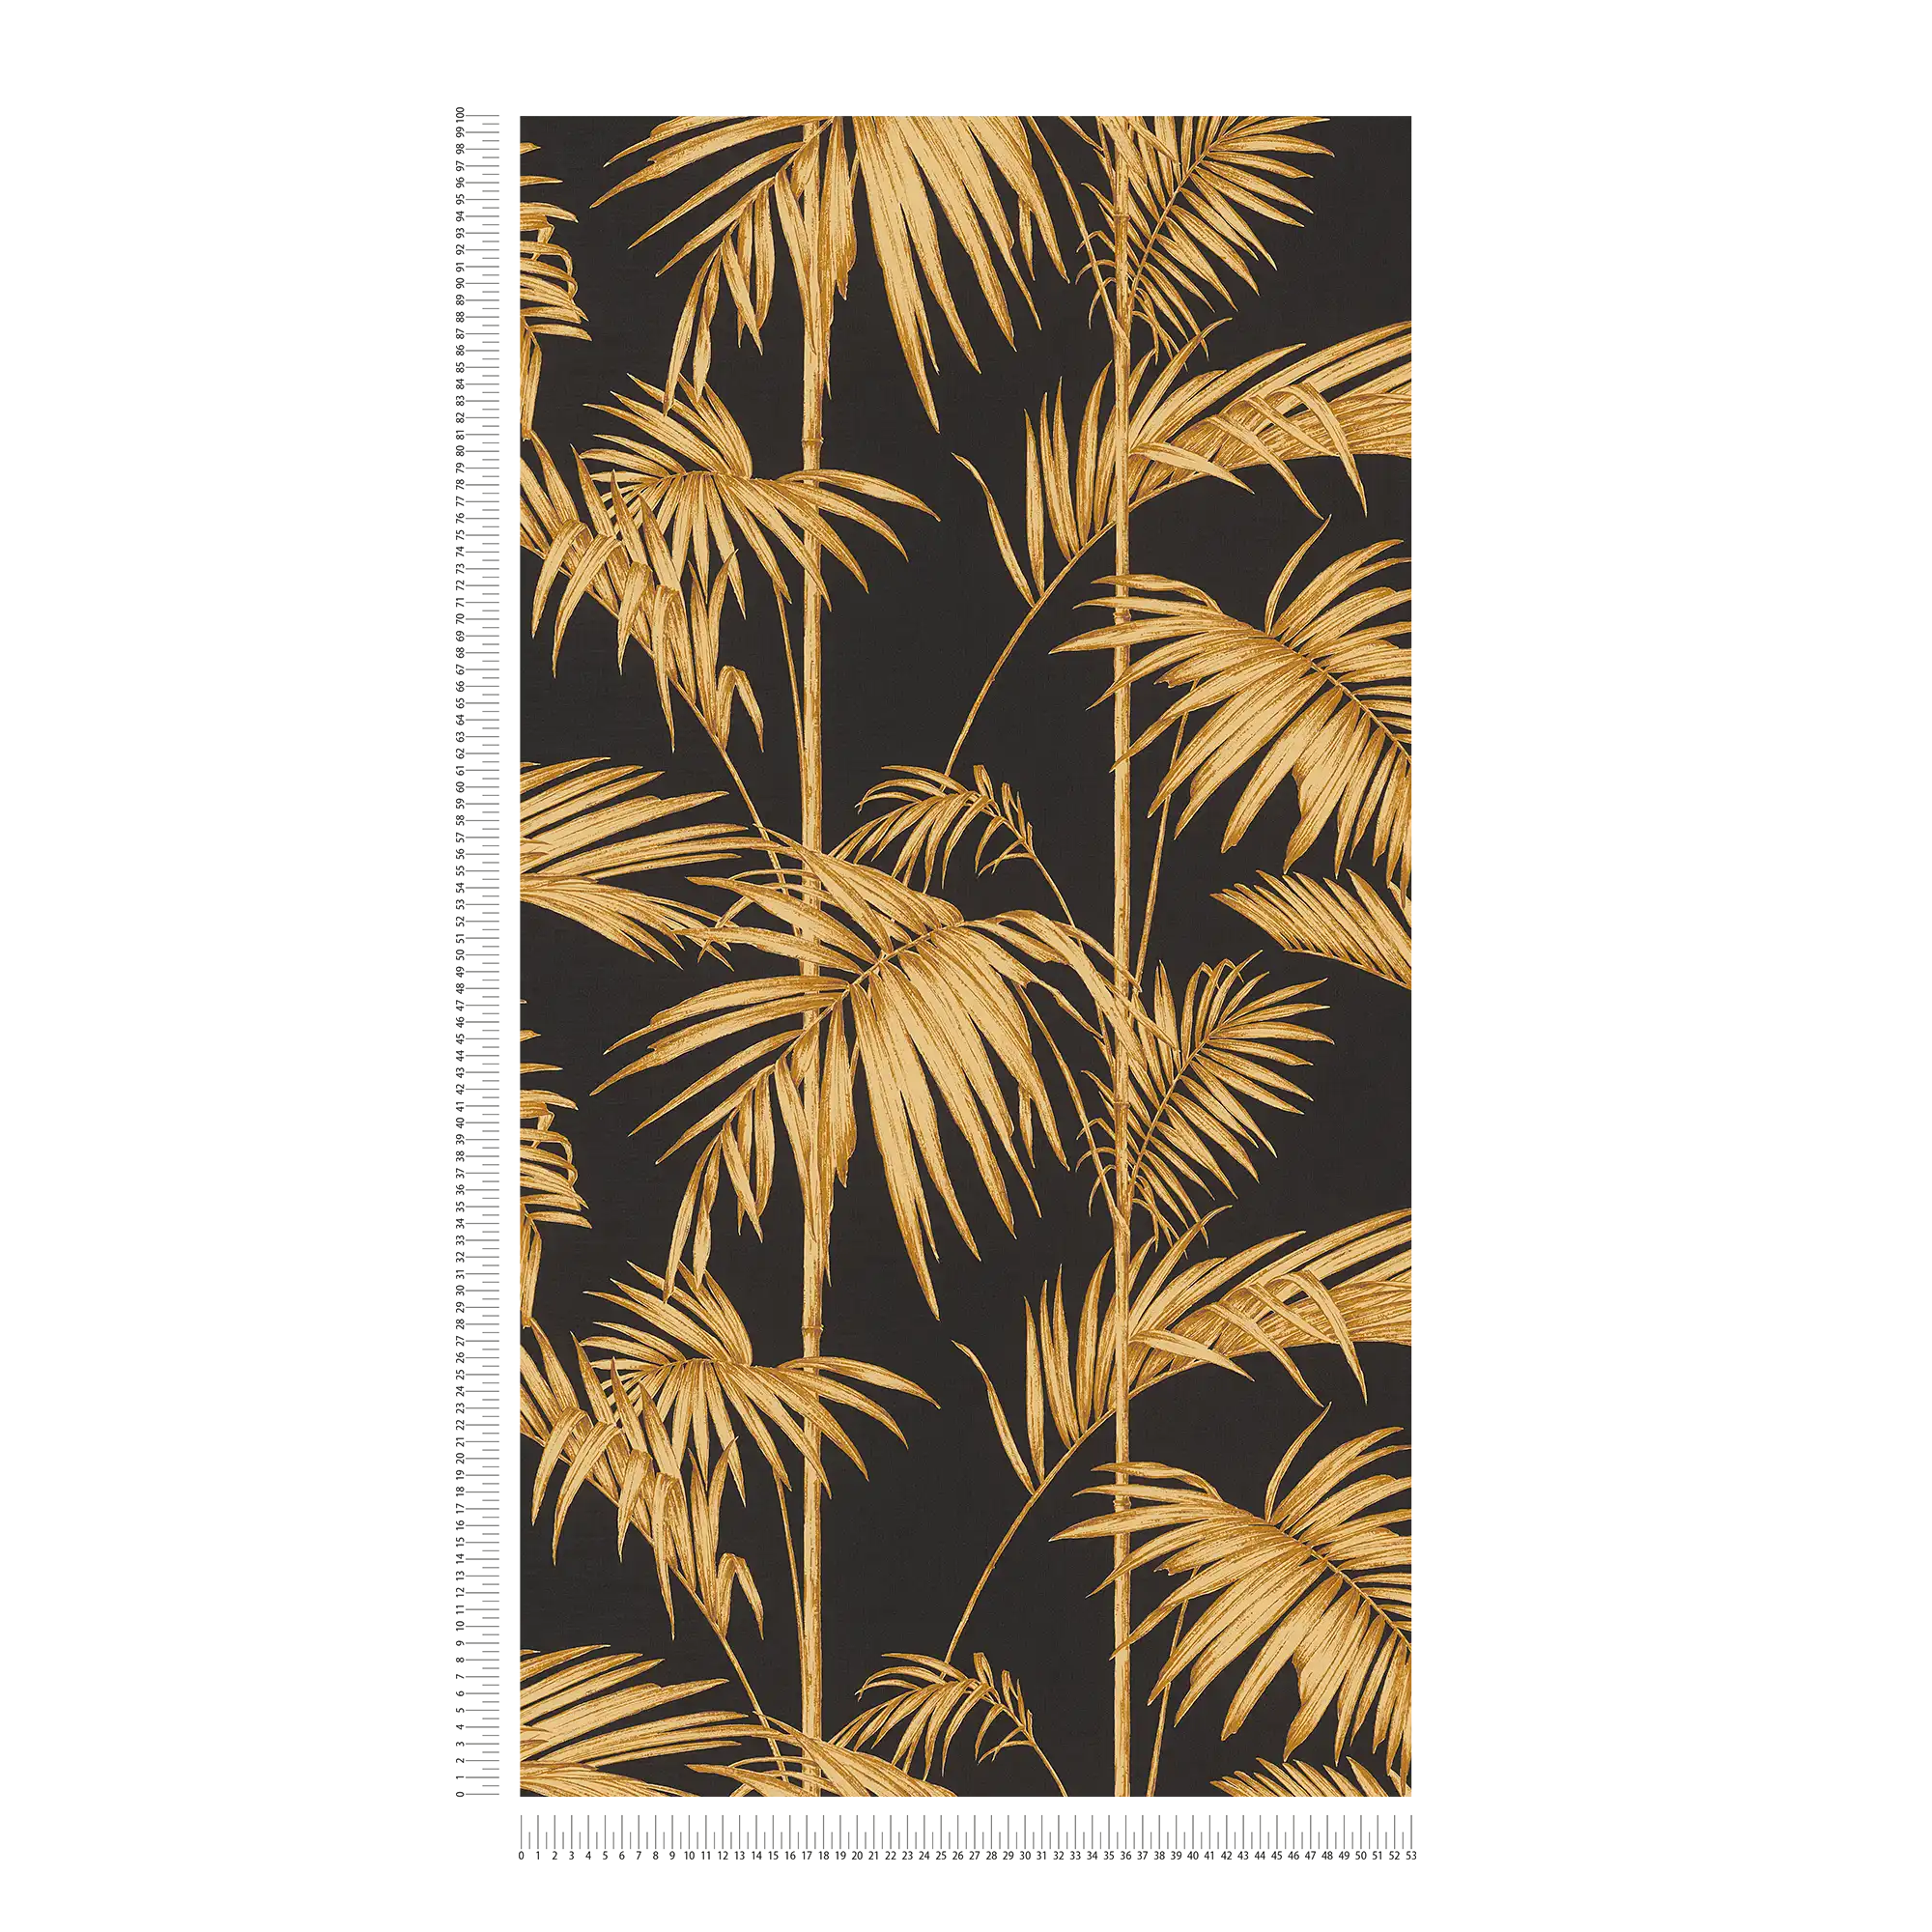             Carta da parati naturale Foglie di palma, bambù - Oro, nero, arancione
        